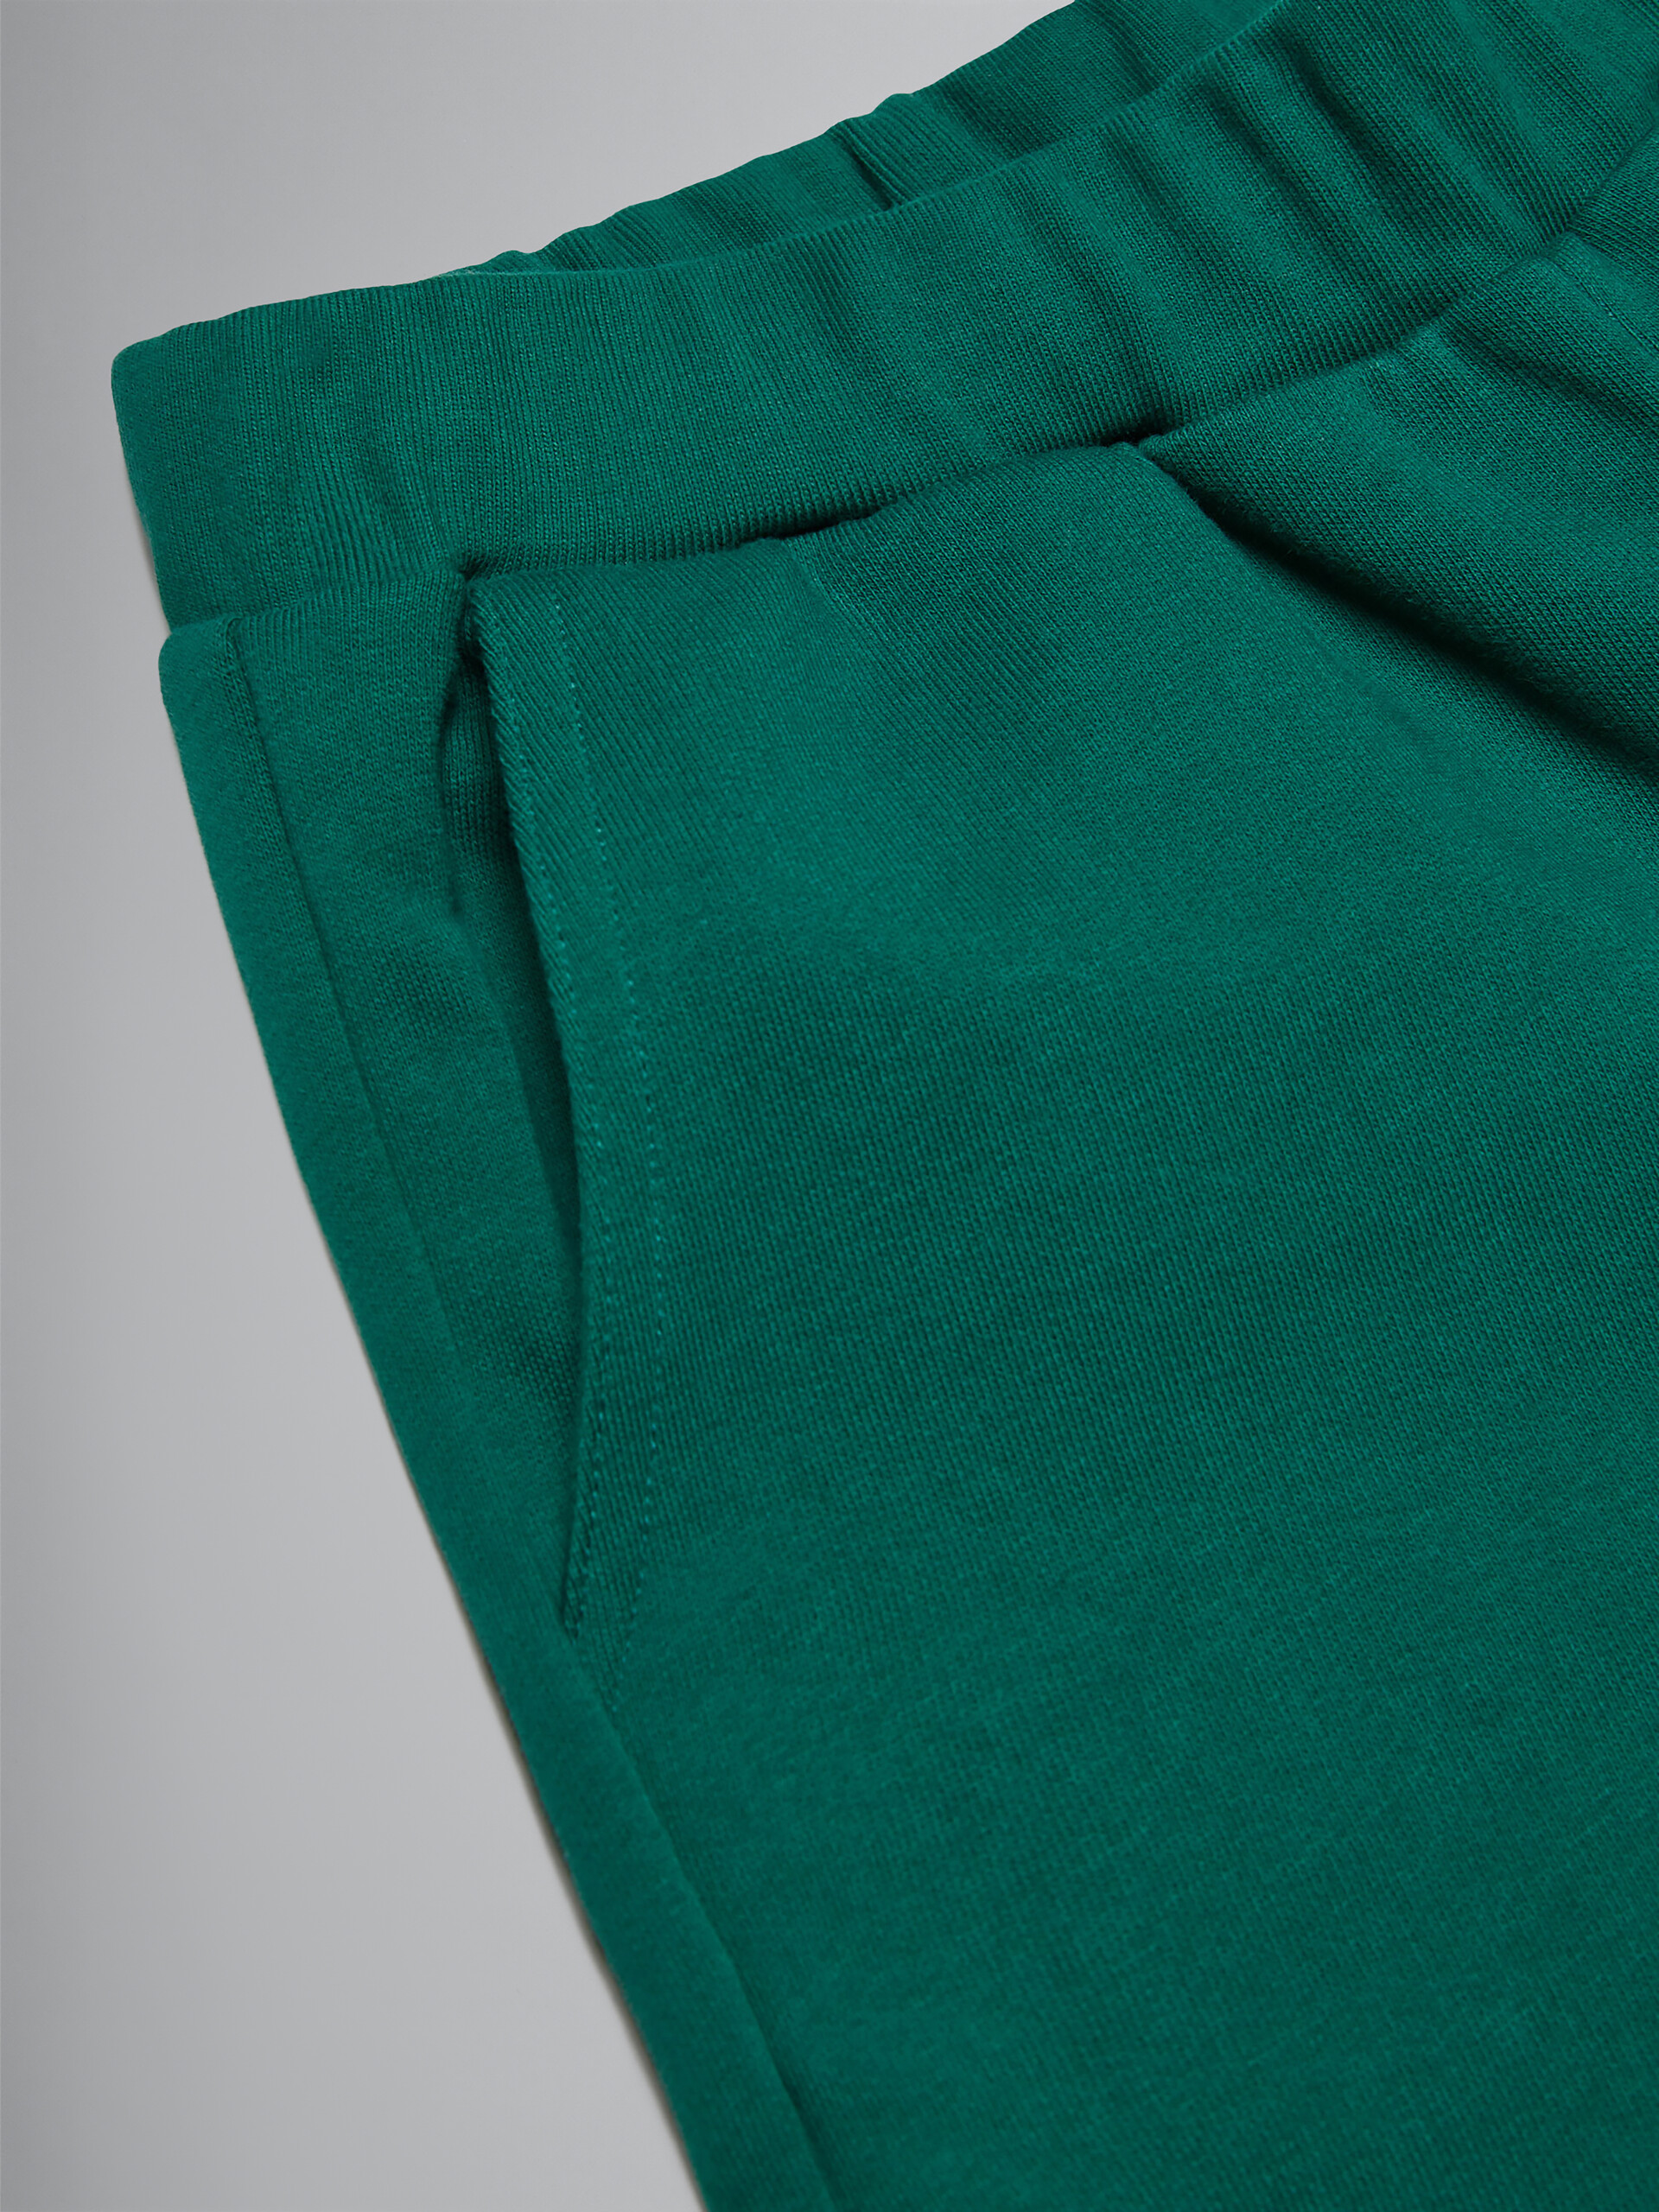 Pantalón corto verde de felpa con logotipo - Pantalones - Image 3